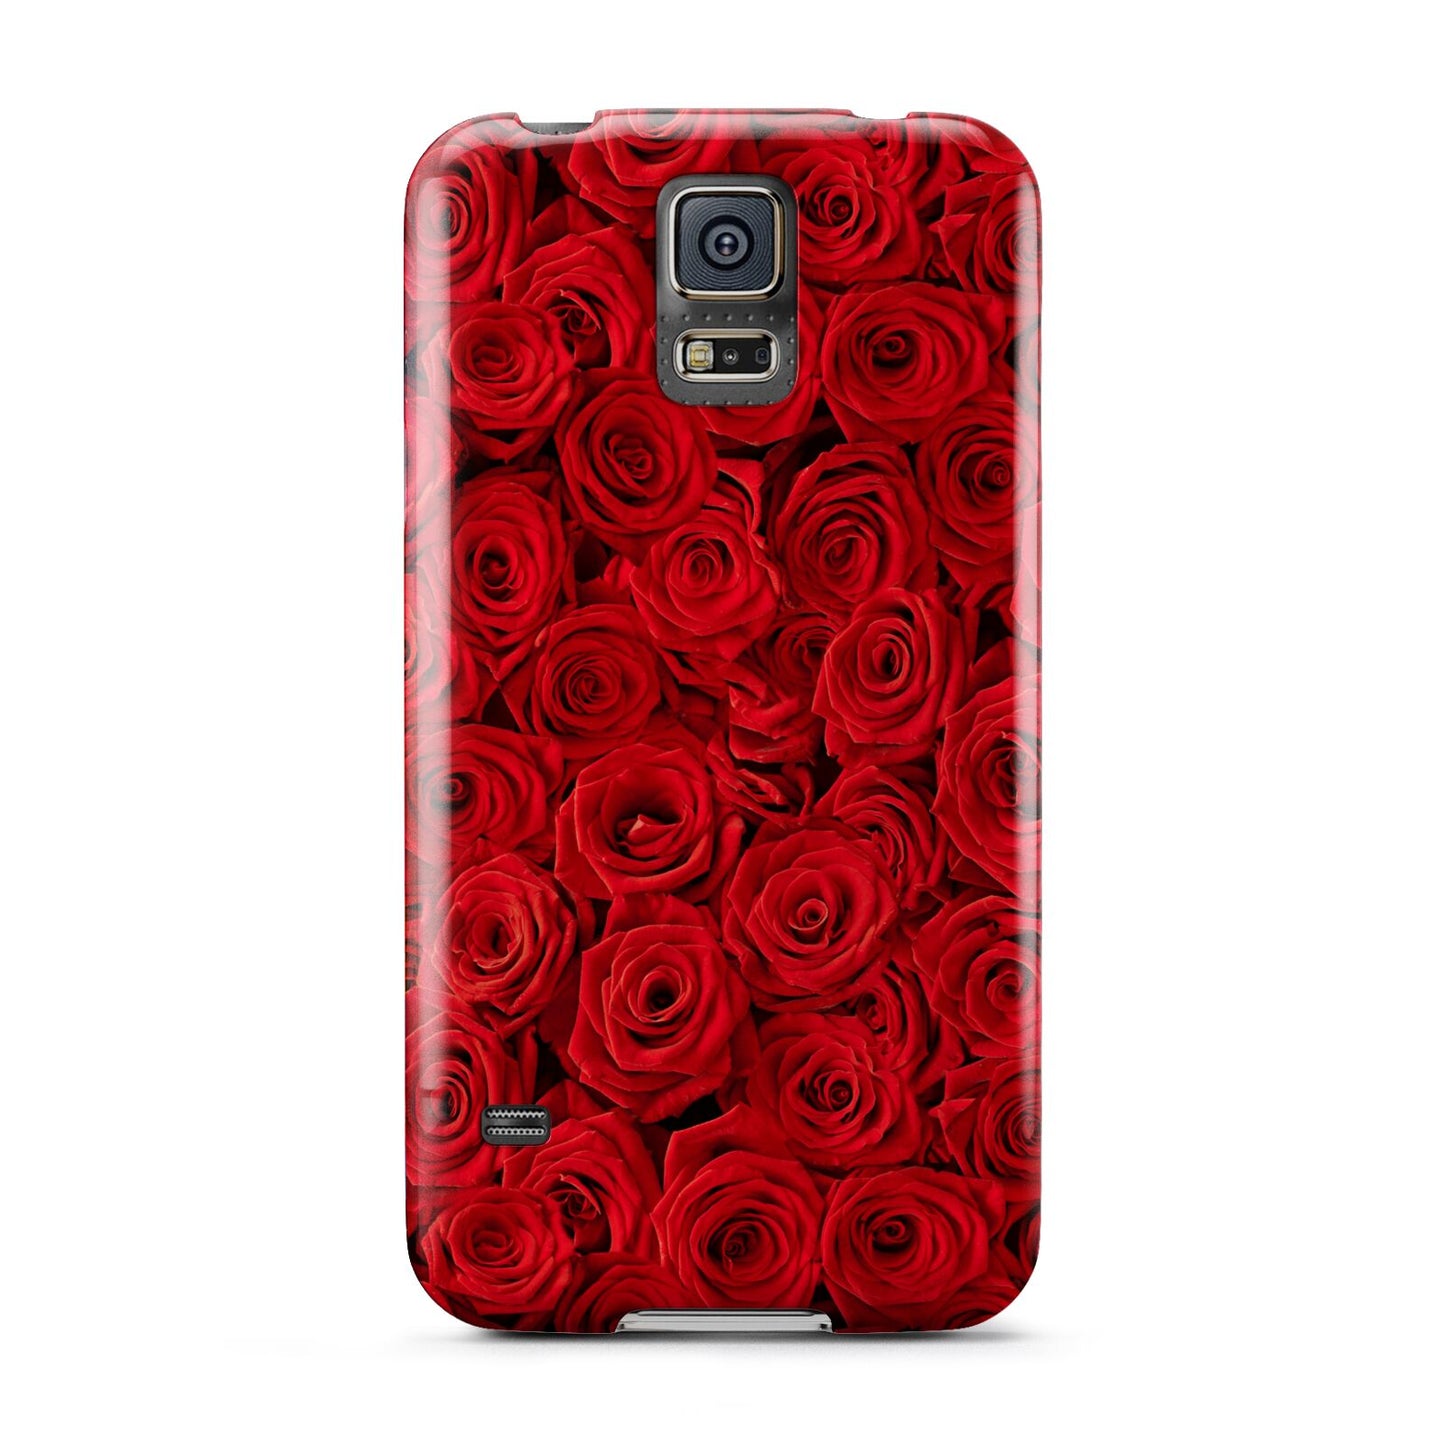 Red Rose Samsung Galaxy S5 Case